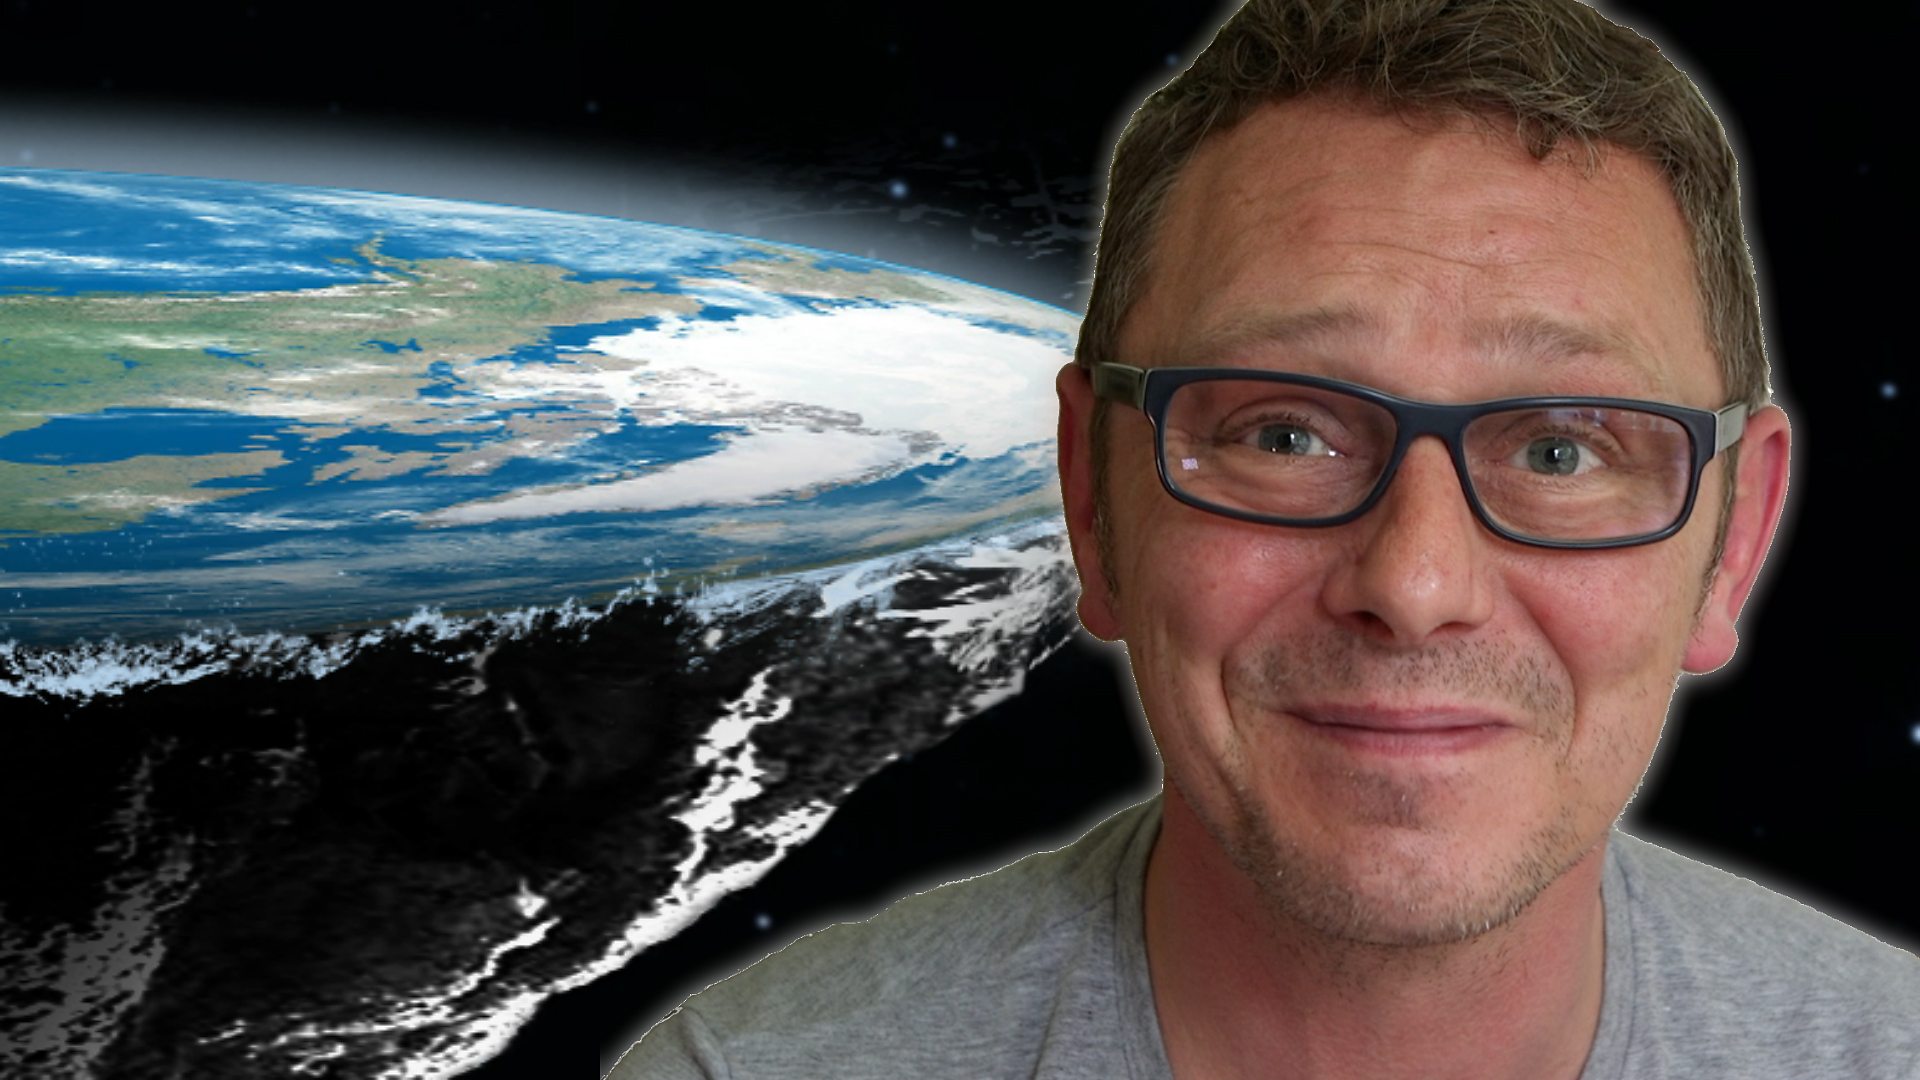 Flat Earth: How did YouTube help spread 